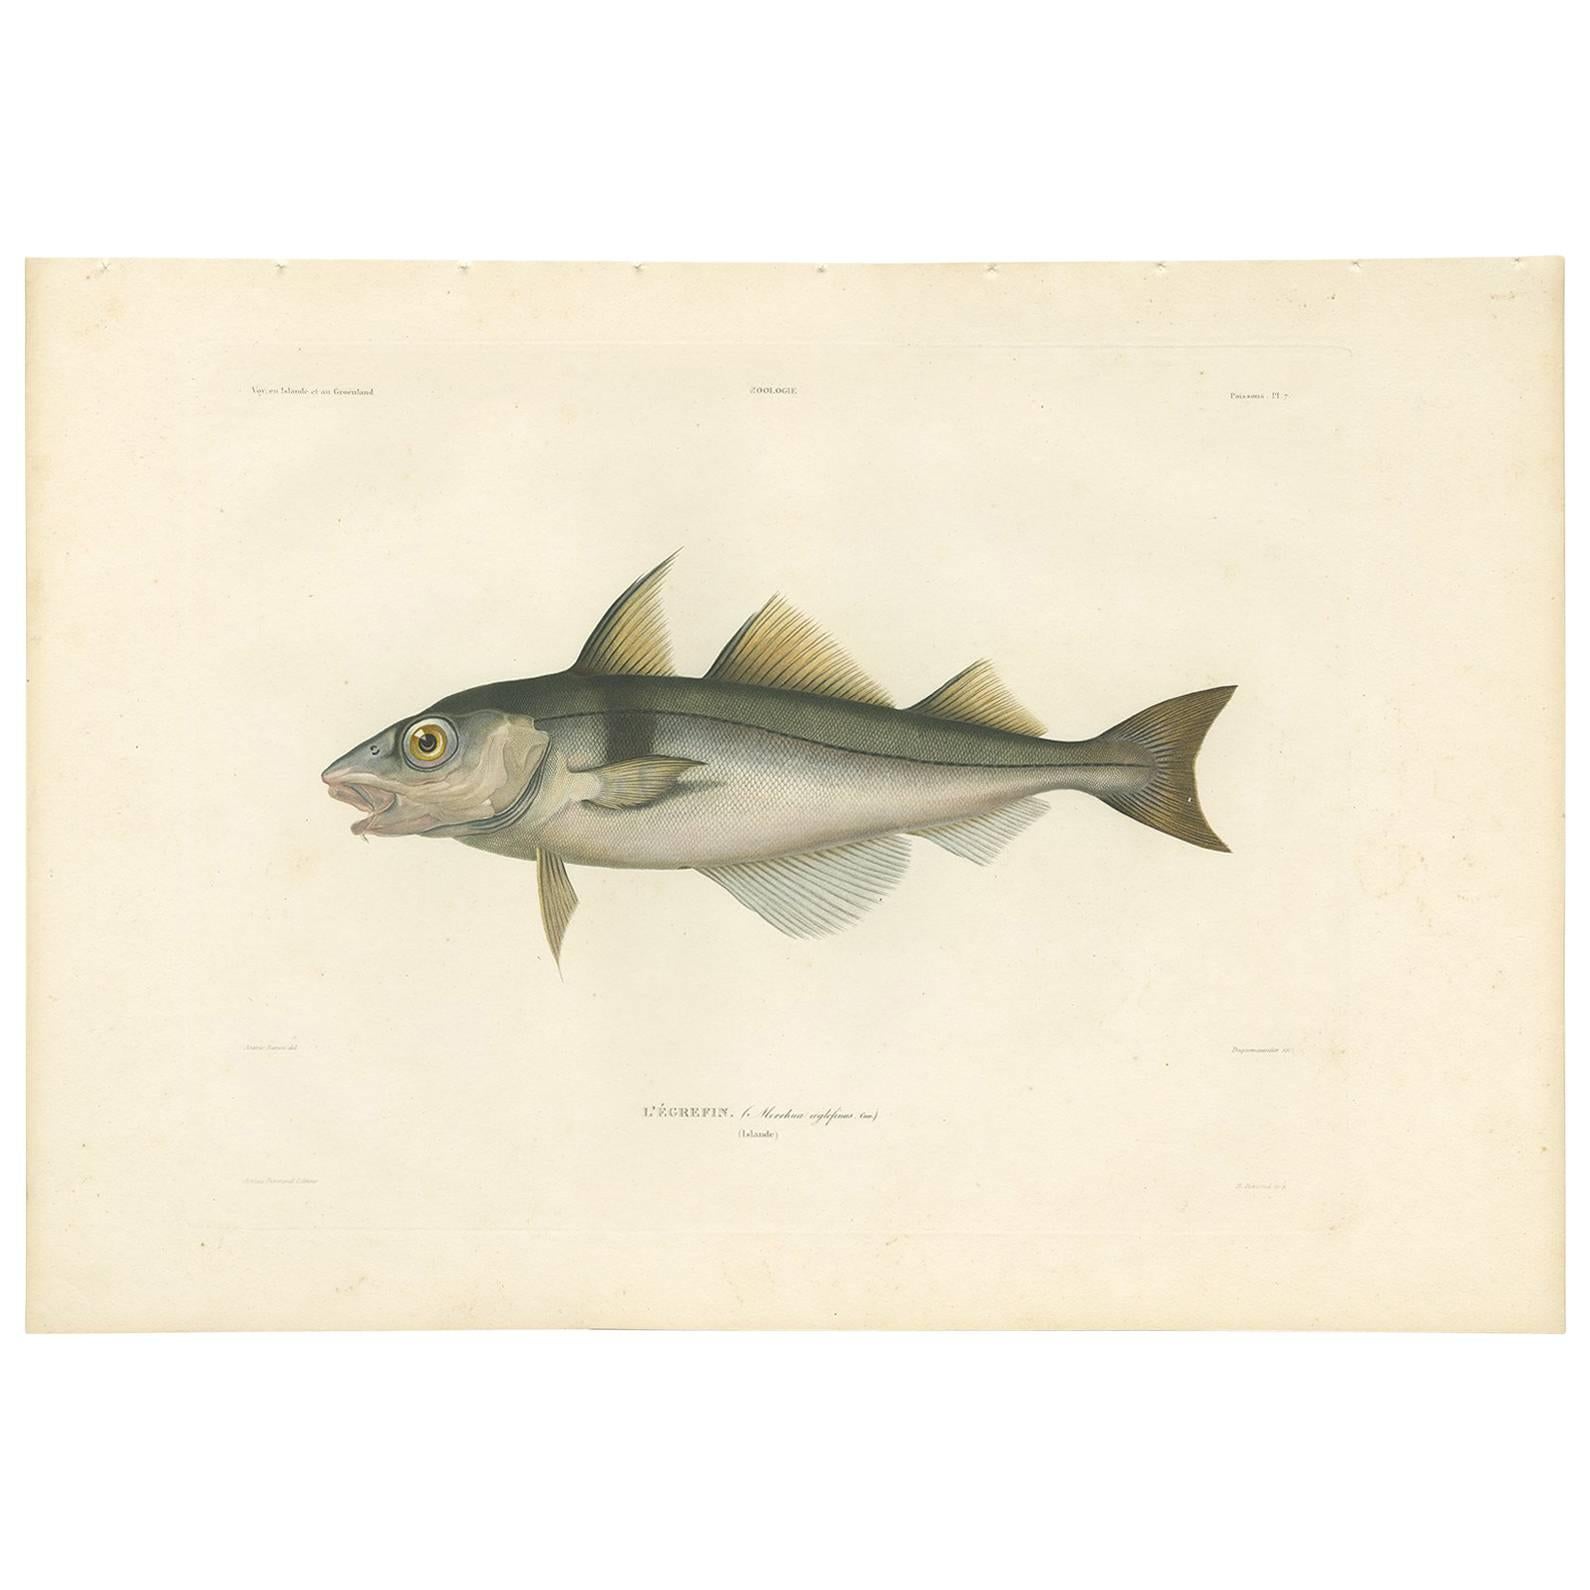 Antique Fish Print of the Haddock by M.P. Gaimard, 1842